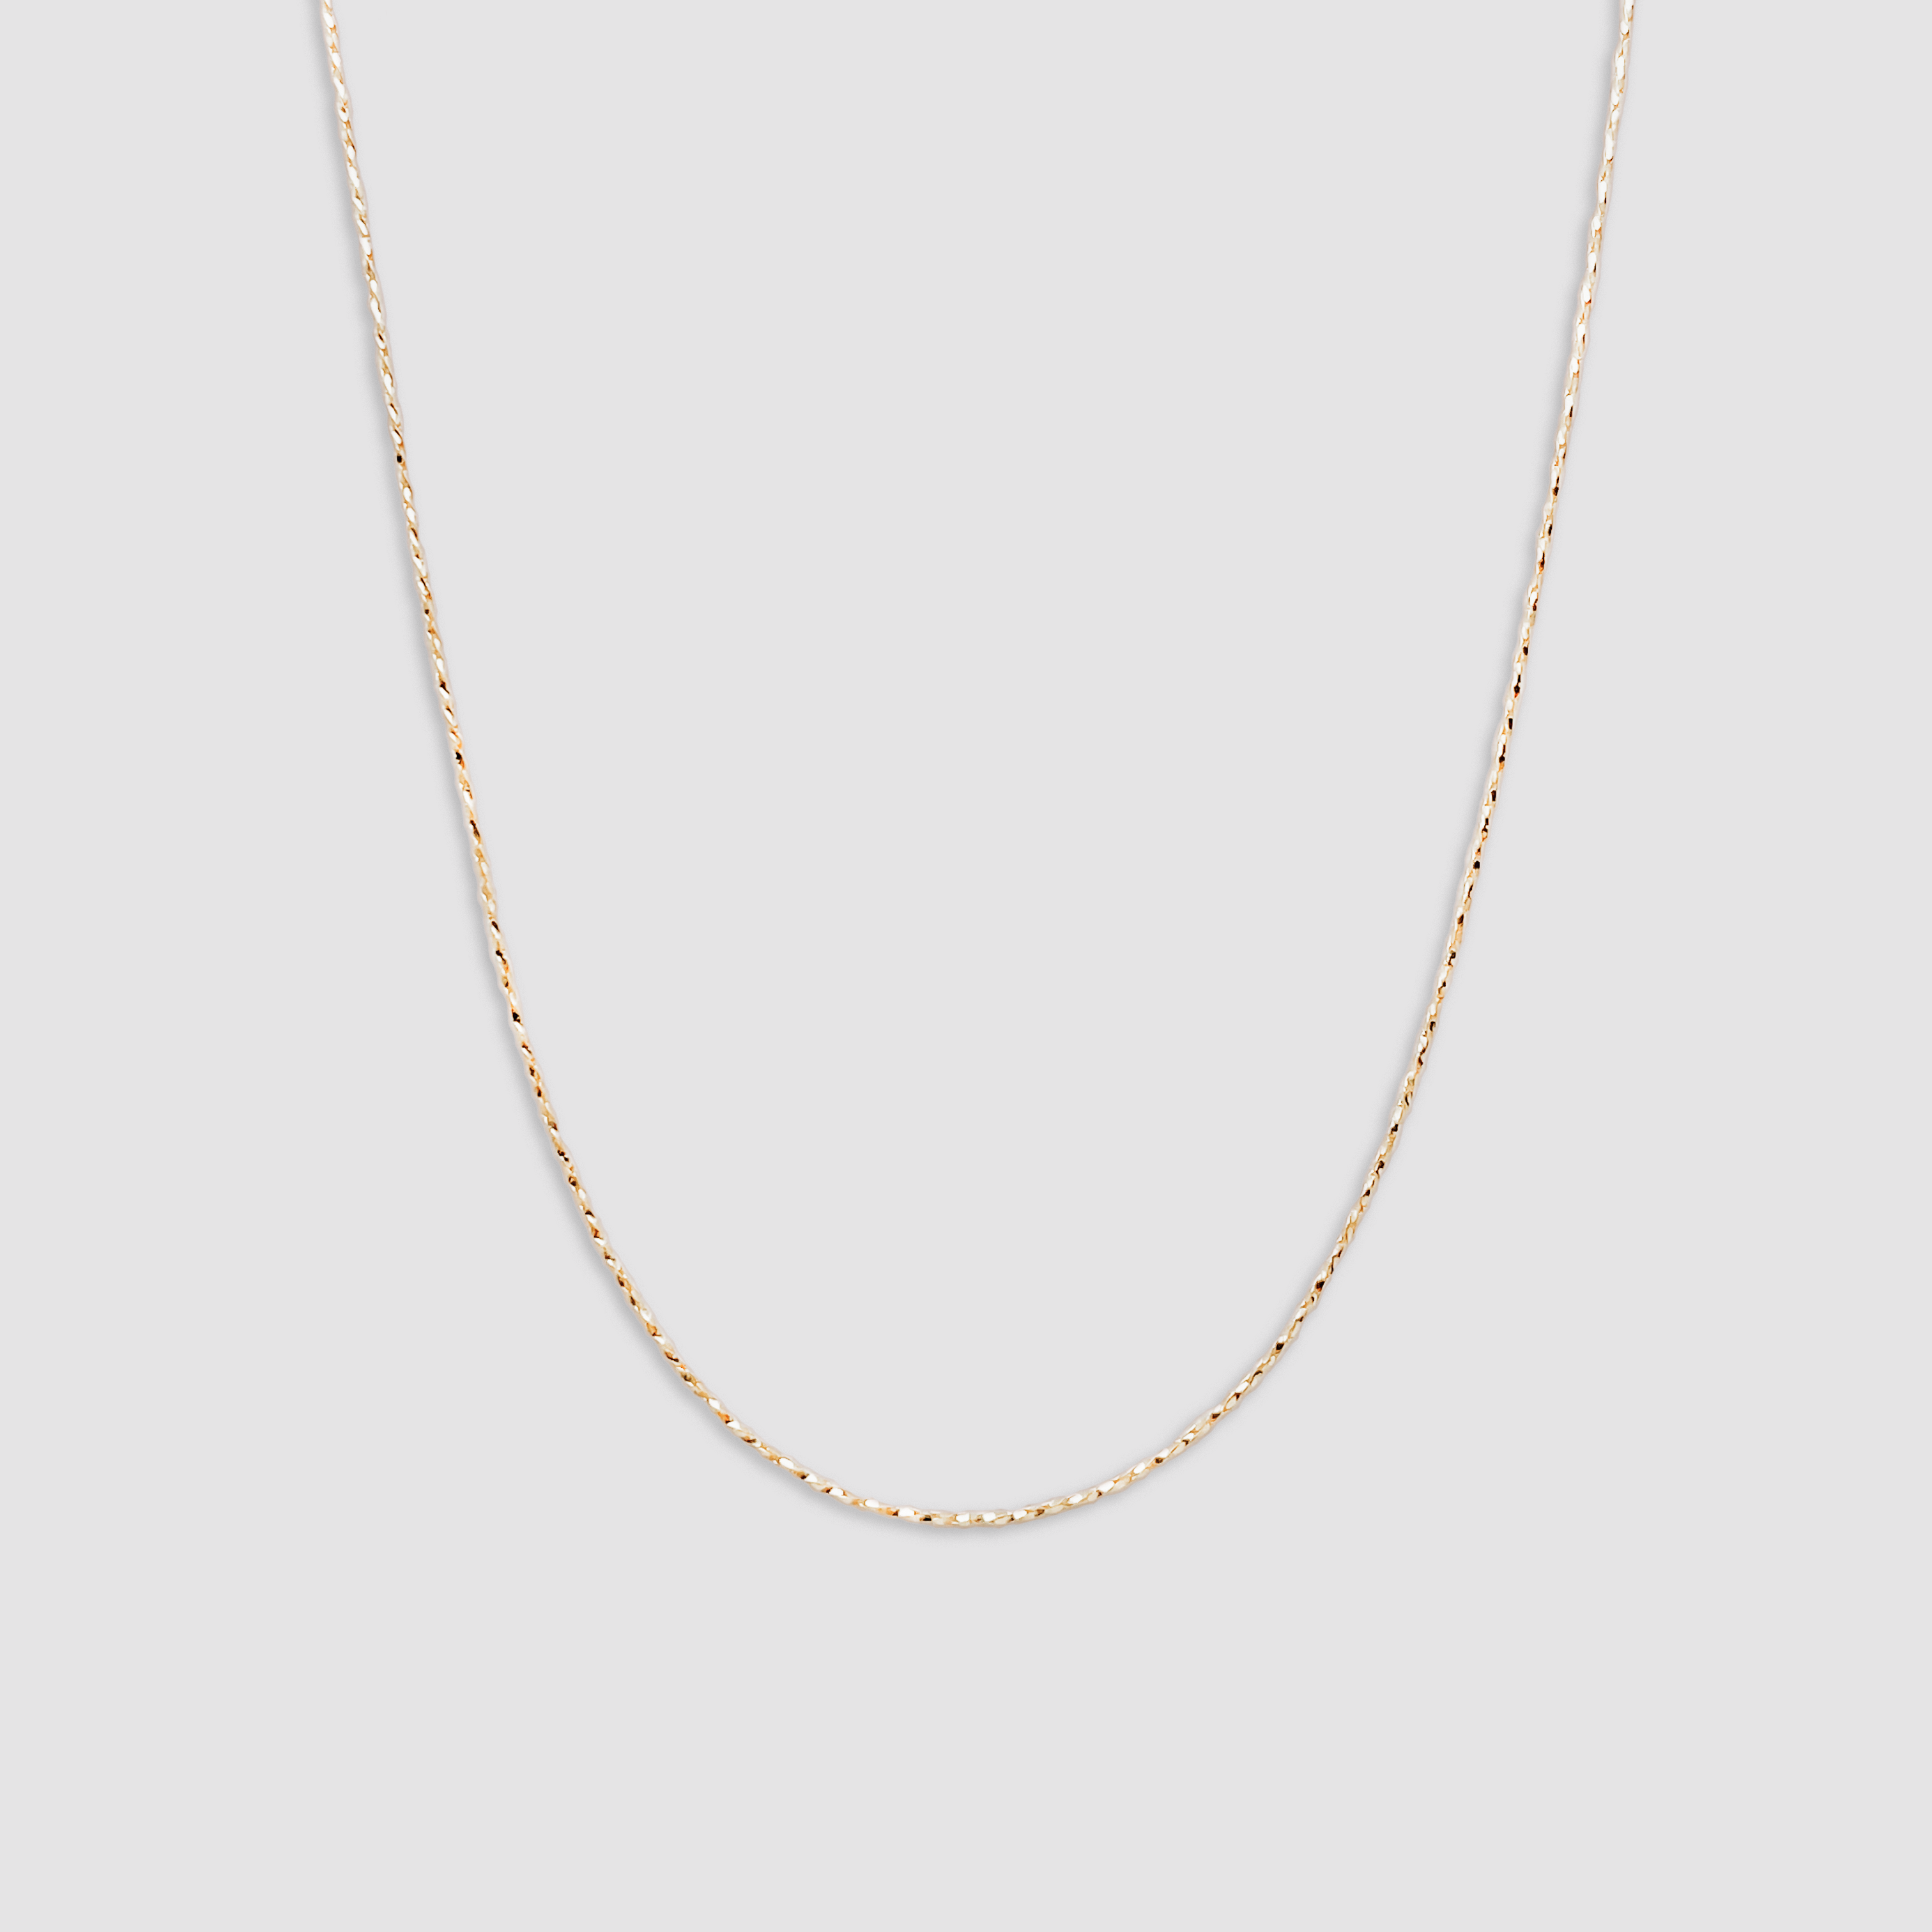 Britney Chain Necklace 14K Solid Gold. Fine Modern Chic Jewelry that Celebrities Wear